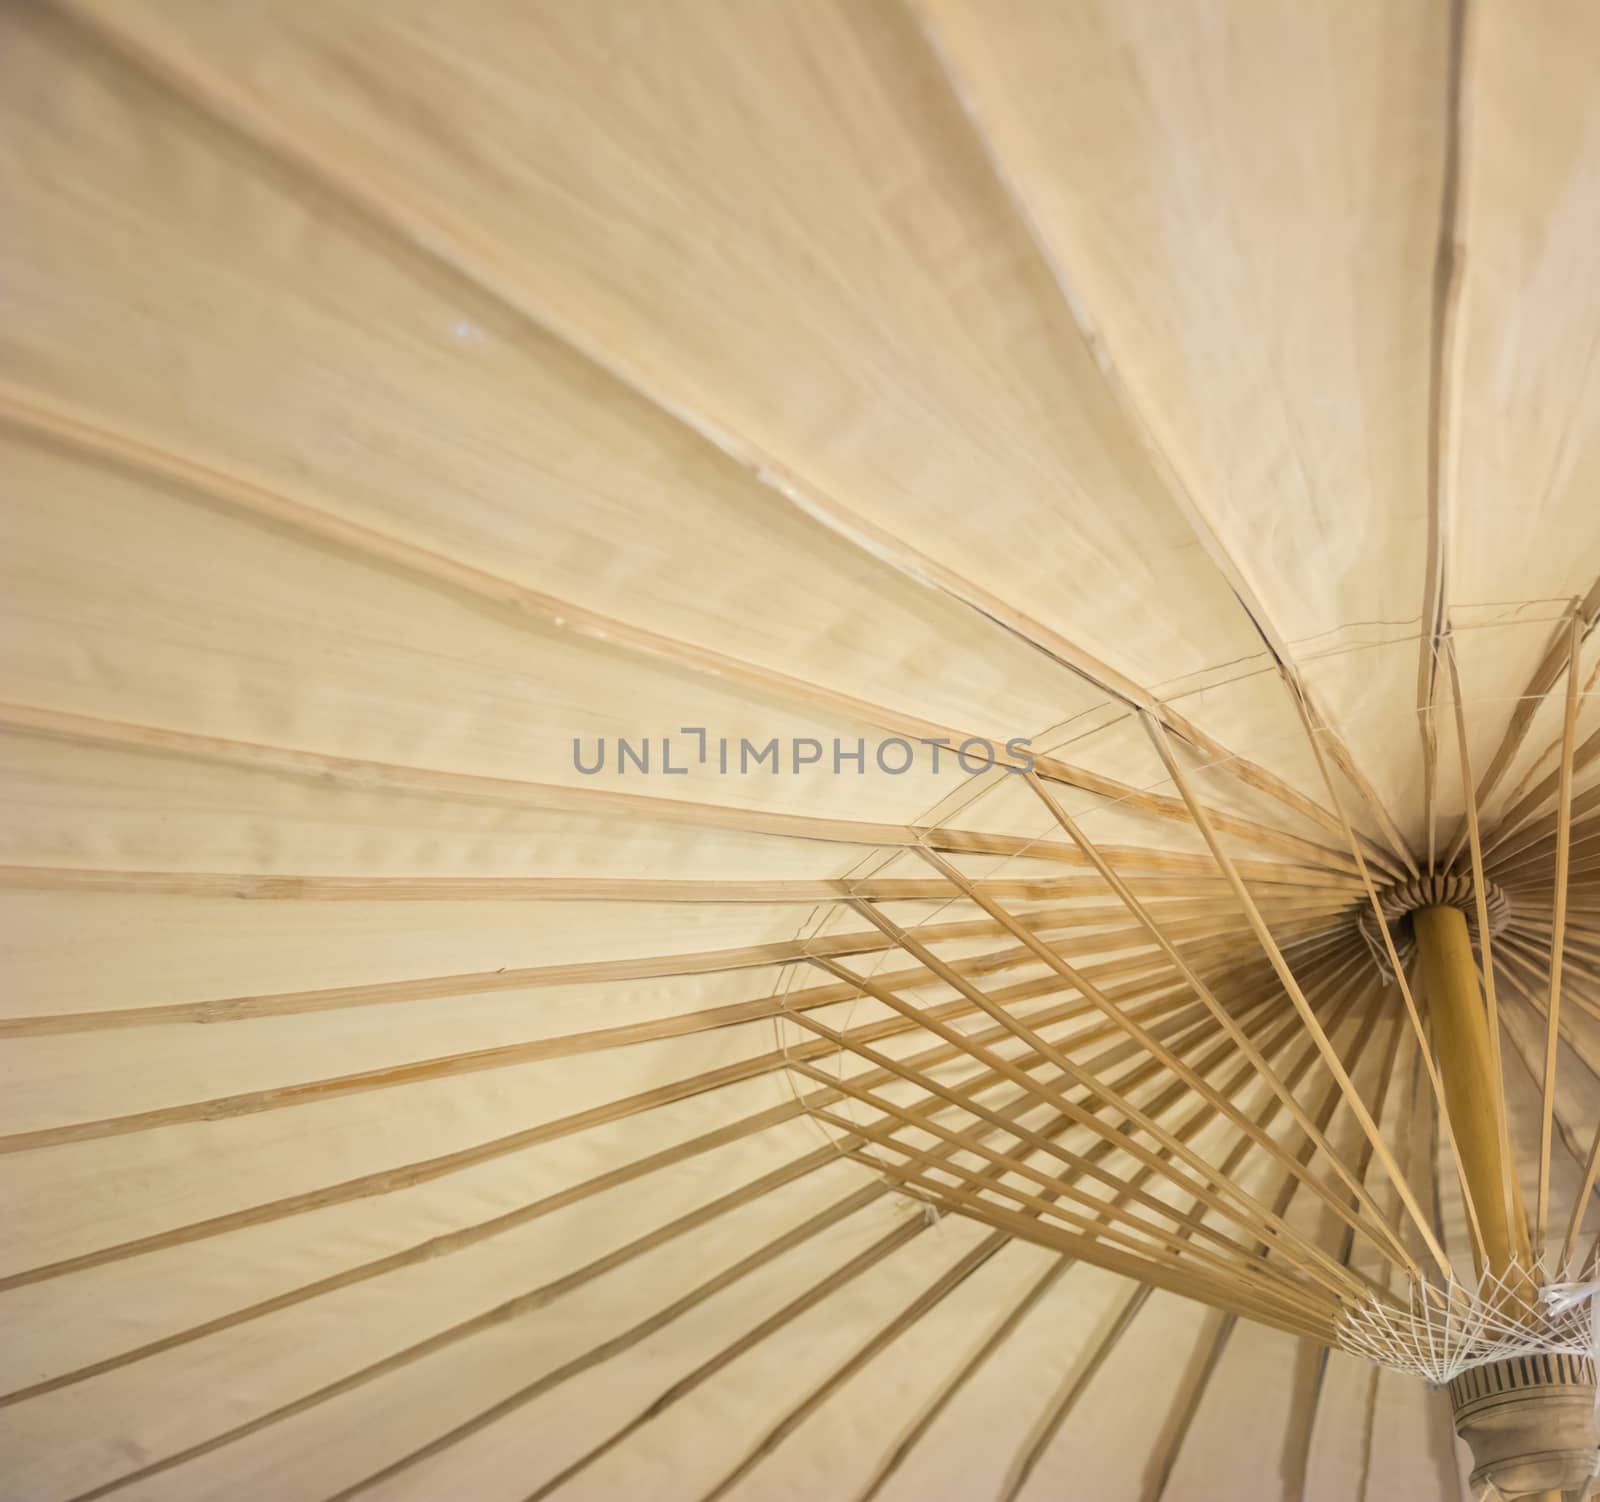 A Thai umbrella handmade beautifu color